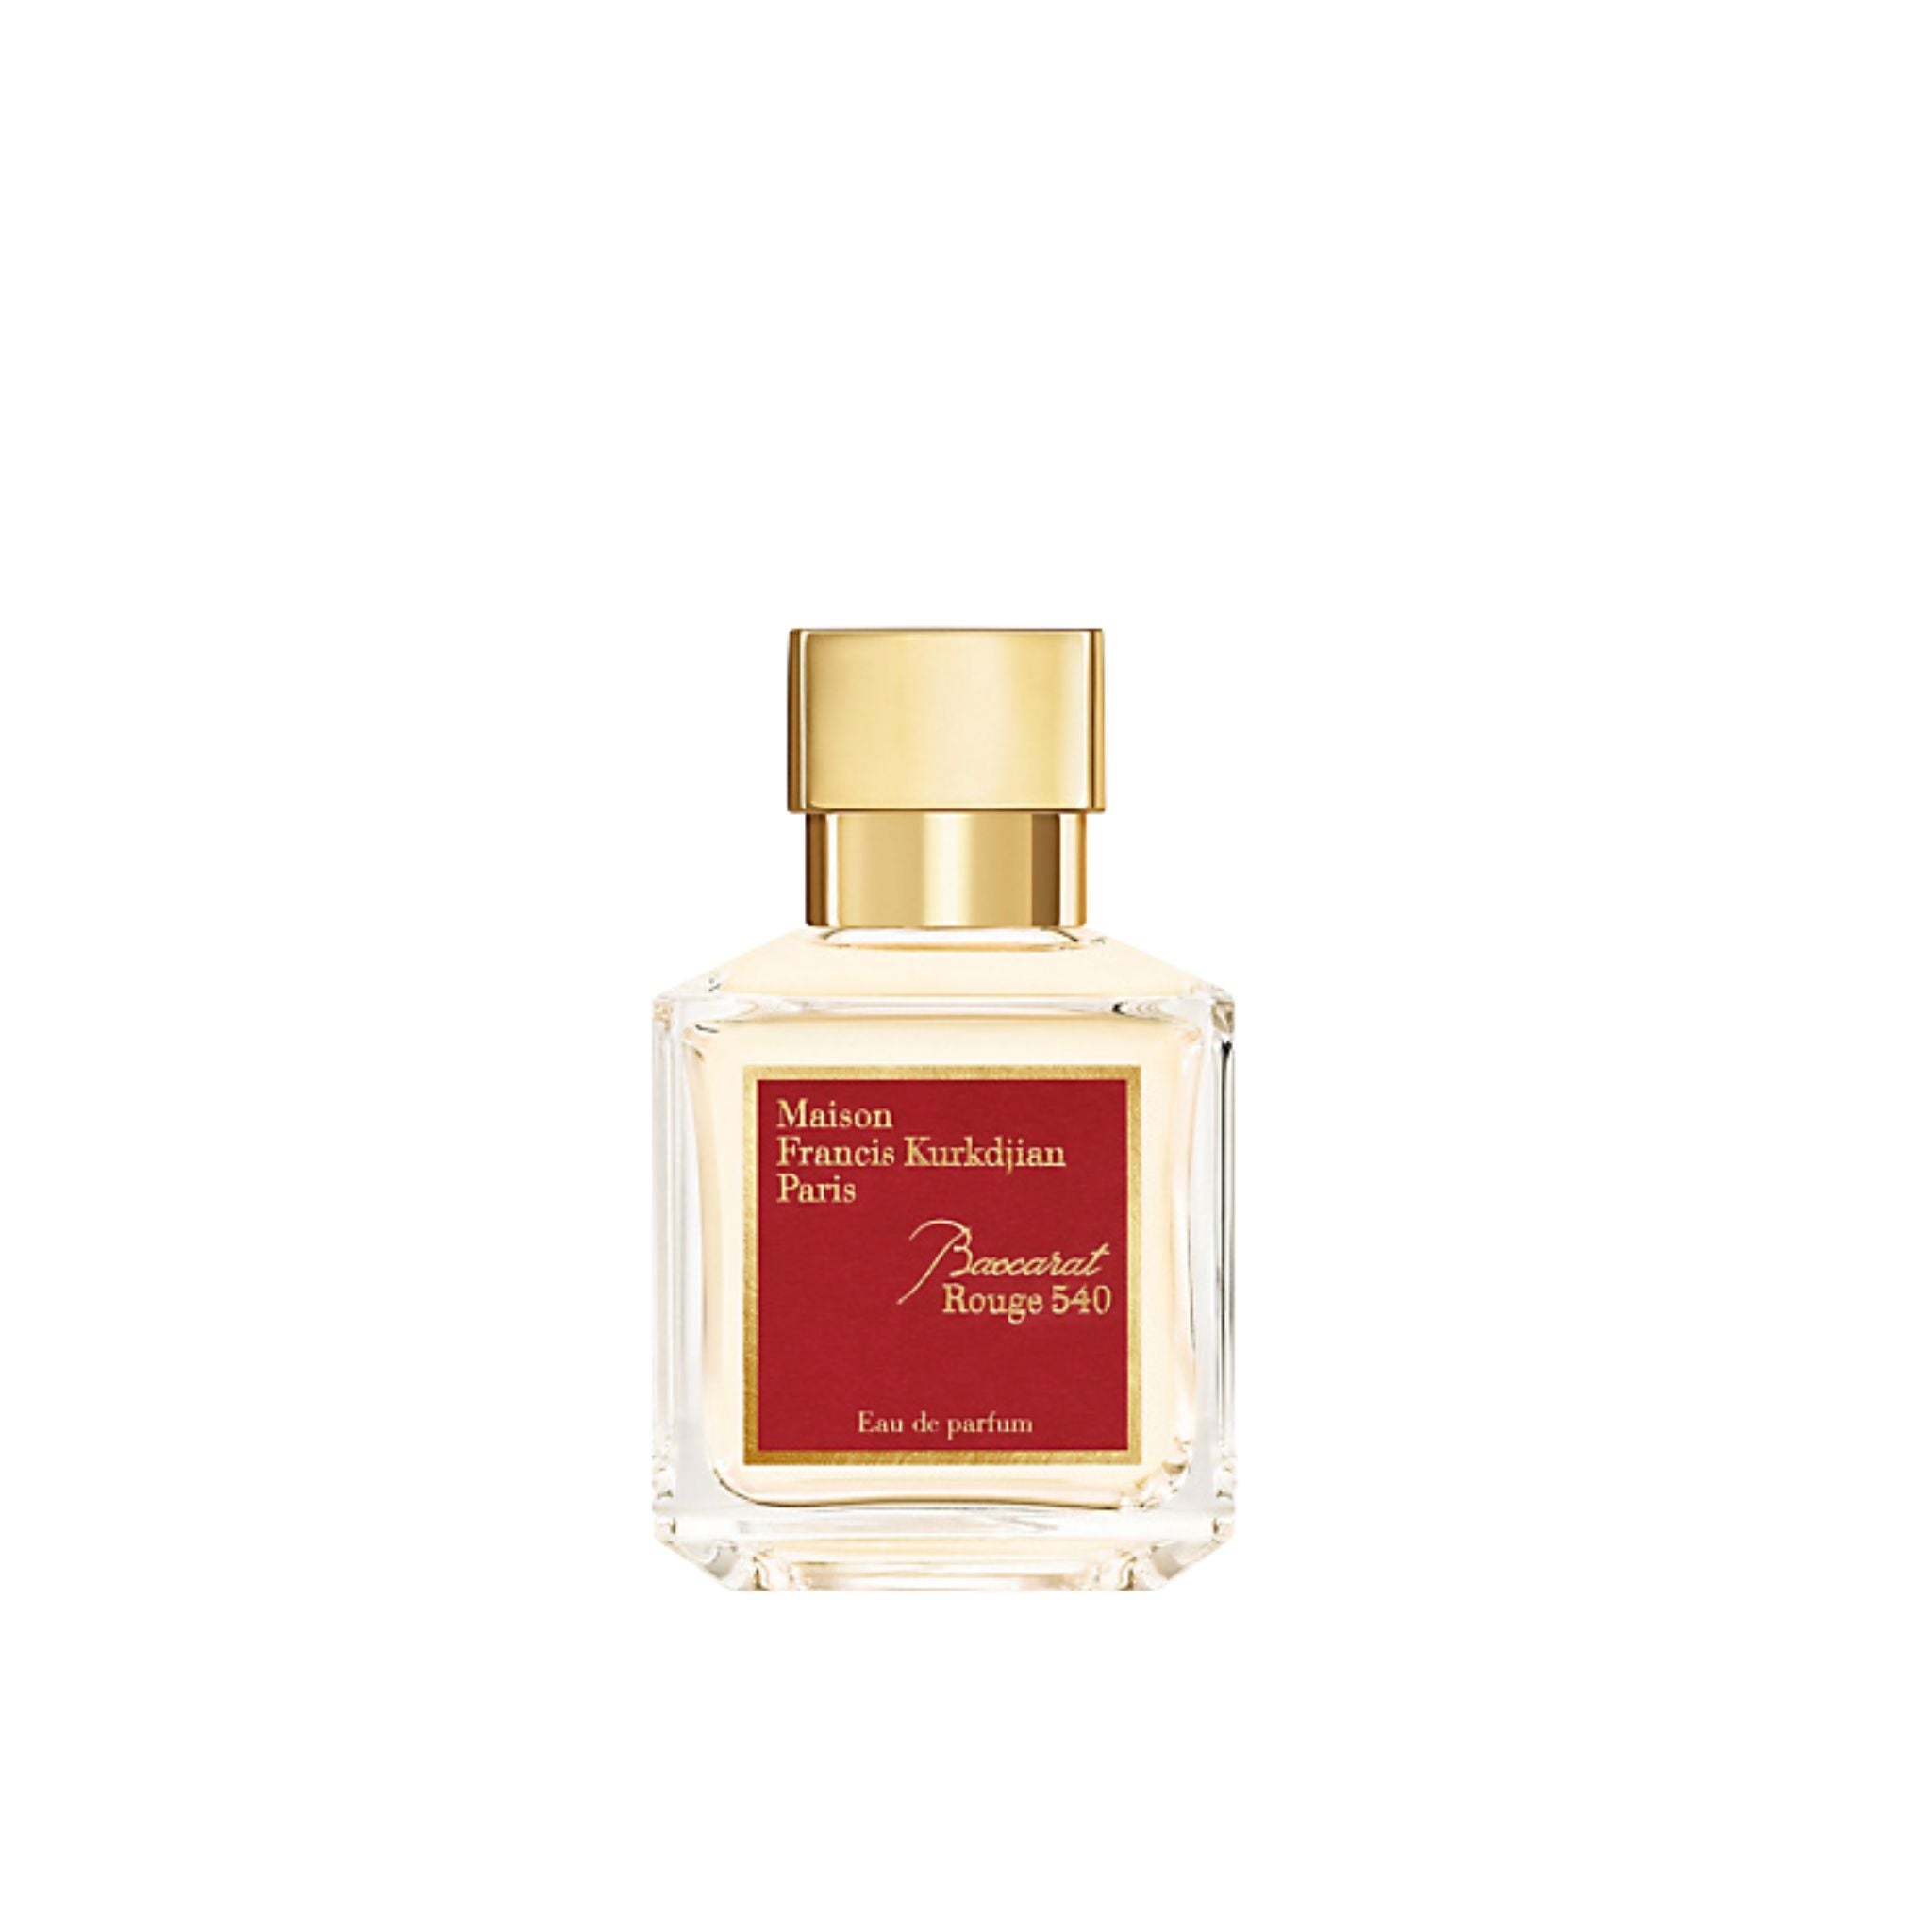 Baccarat Rouge 540 Eau de Parfum - Maison Francis Kurkdjian 